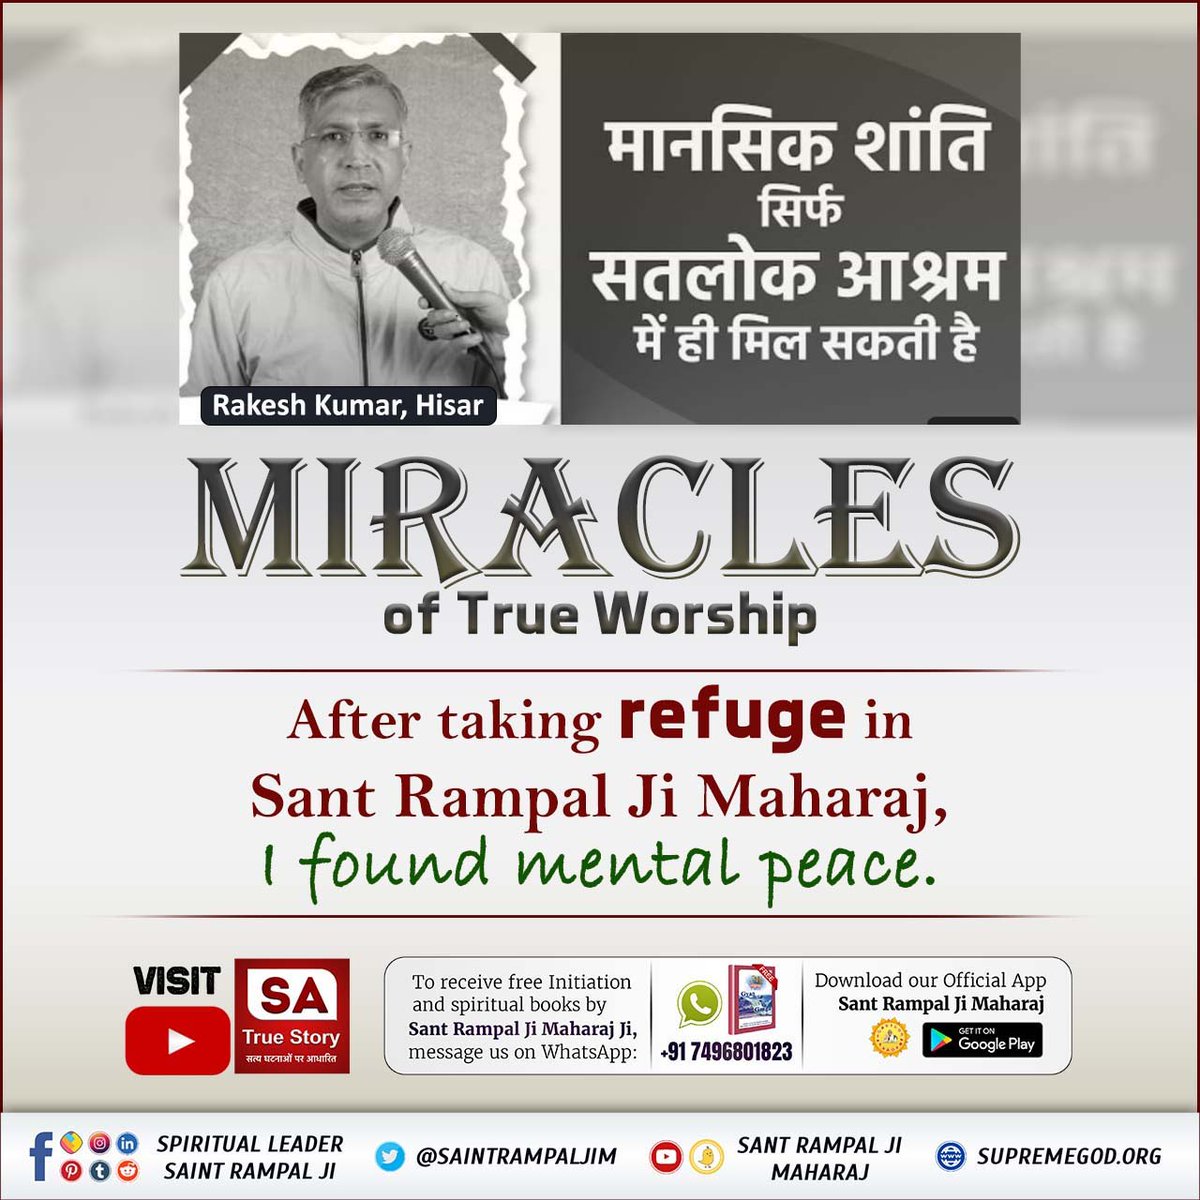 #पापनाशक_सतभक्ति
MIRACLES of True Worship
After taking refuge in Sant Rampal Ji Maharaj, I found mental peace.

Power Of True Worship⤵️